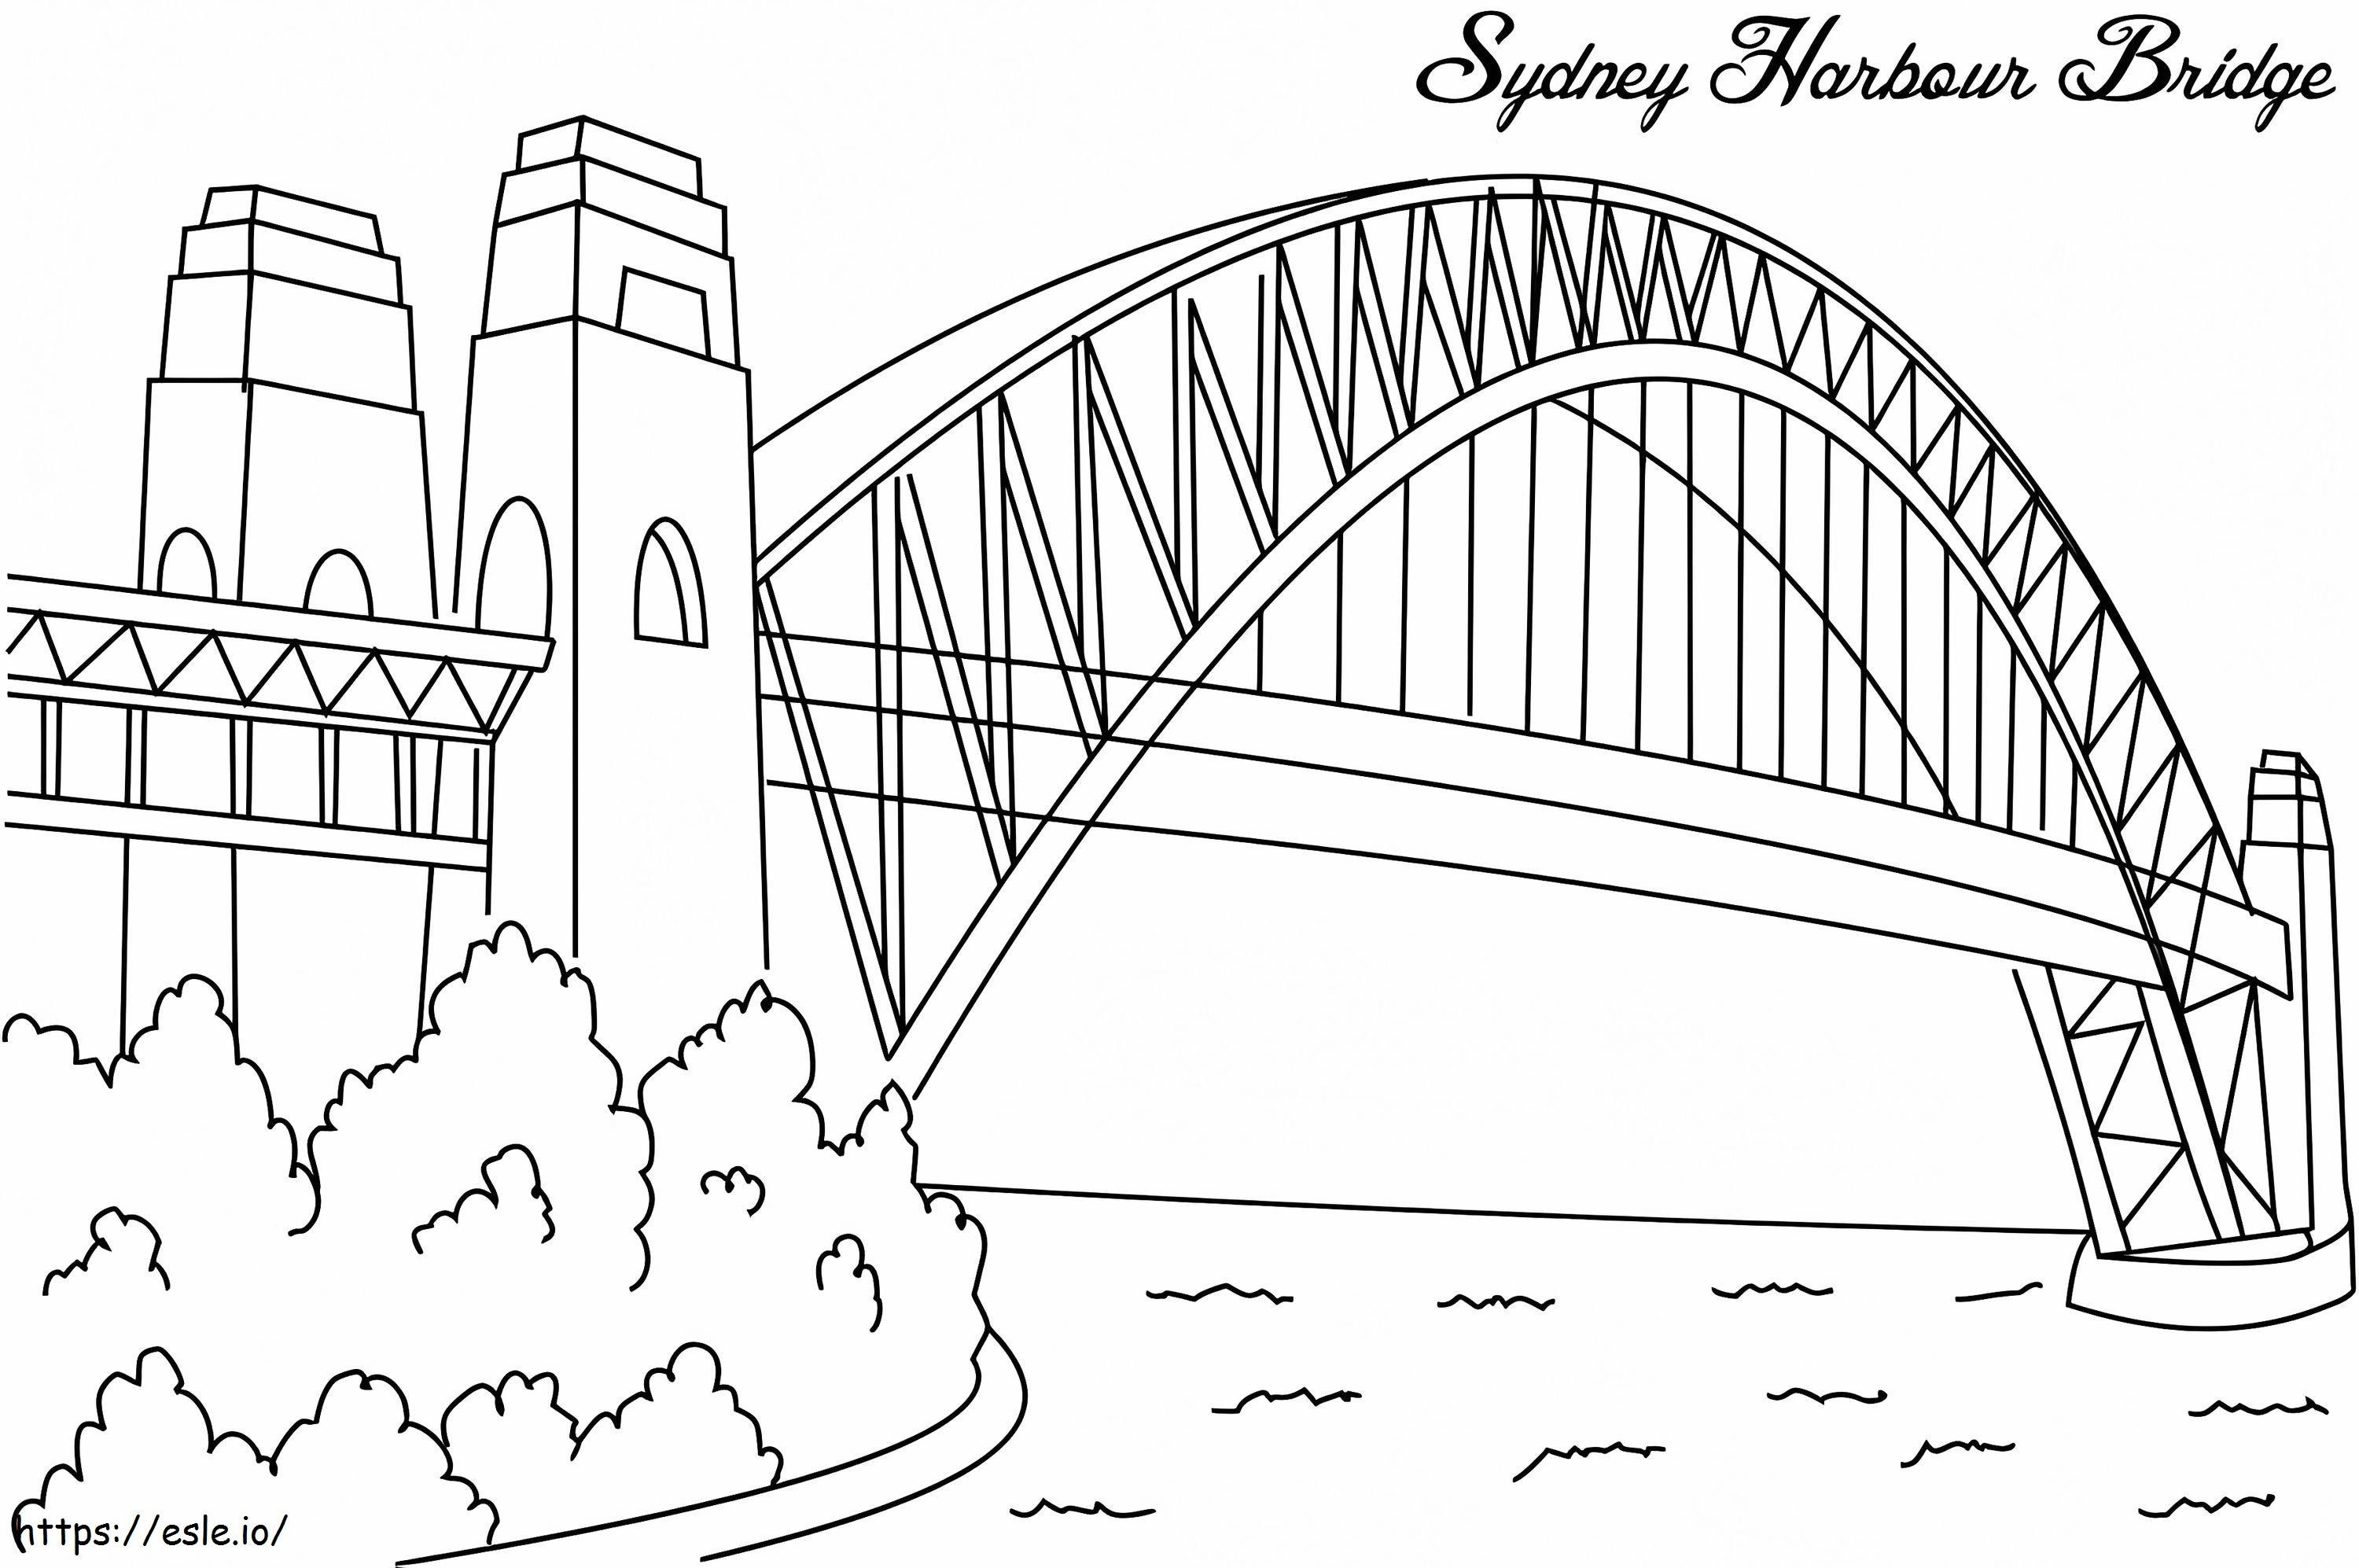  Sydney Harbour Bridge A4 ausmalbilder